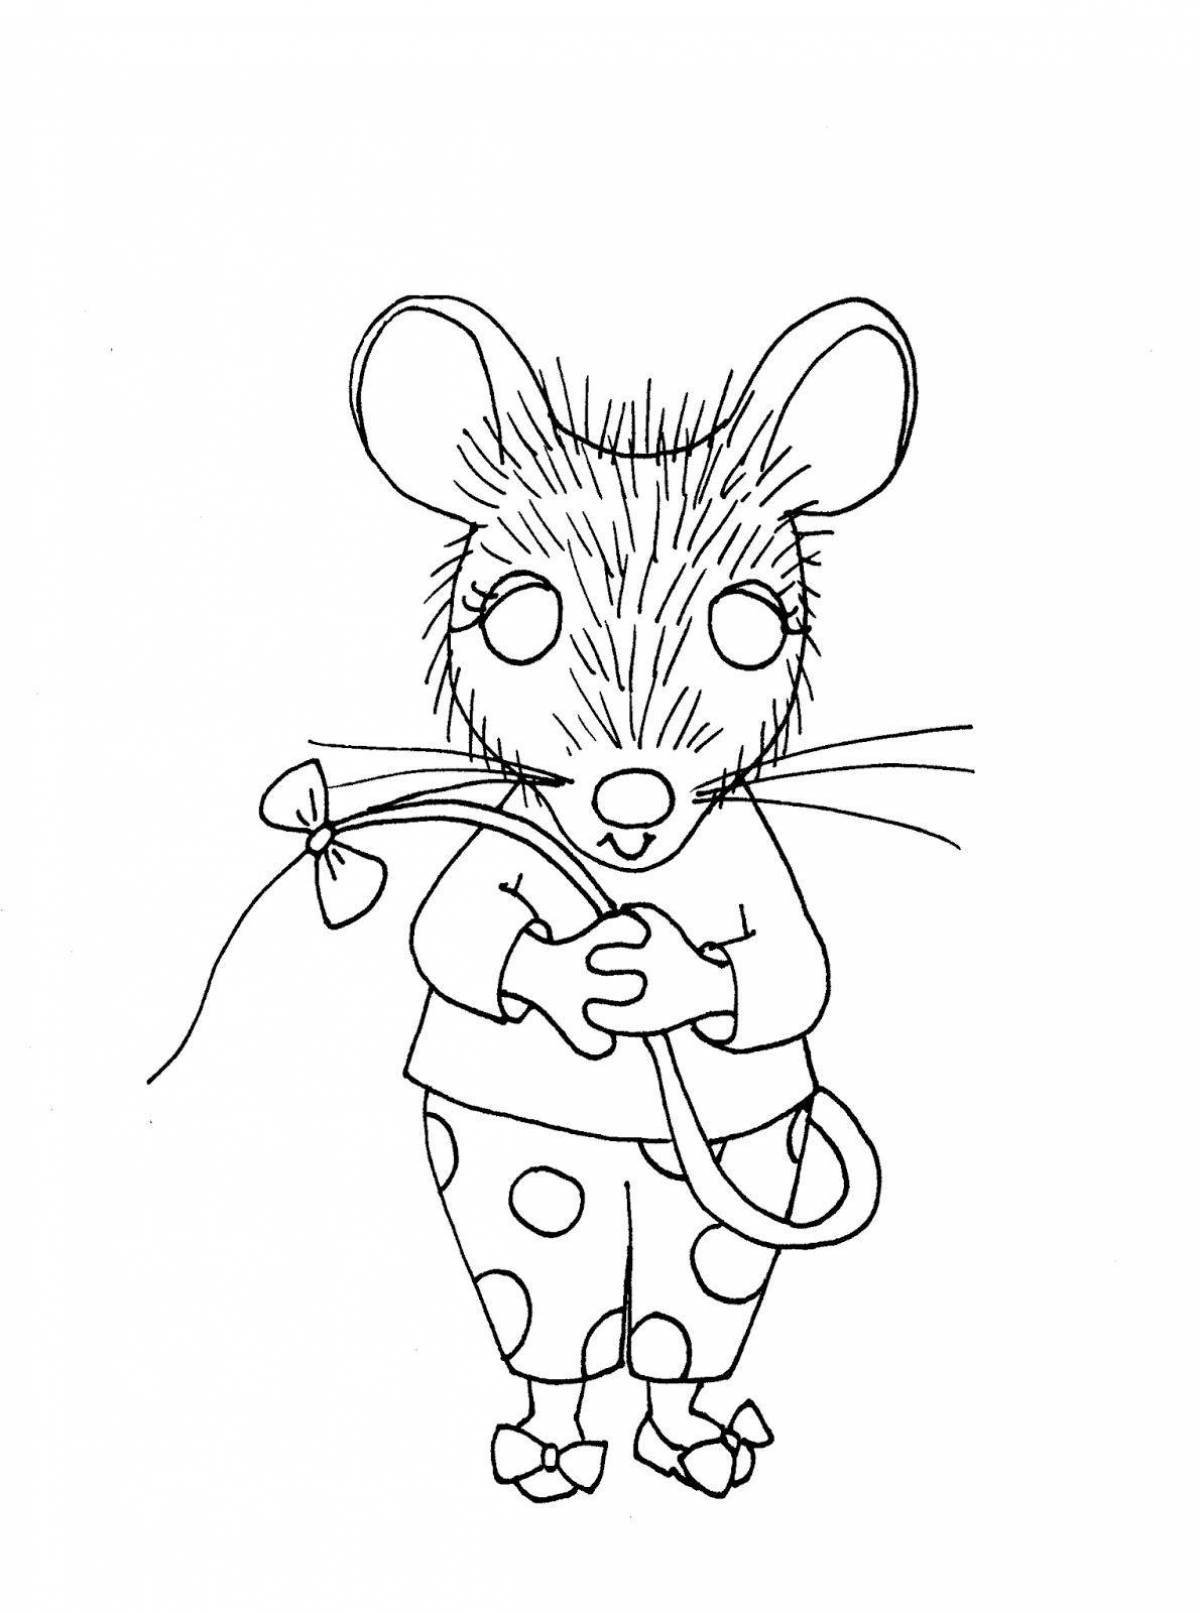 Coloring book joyful mouse norushka